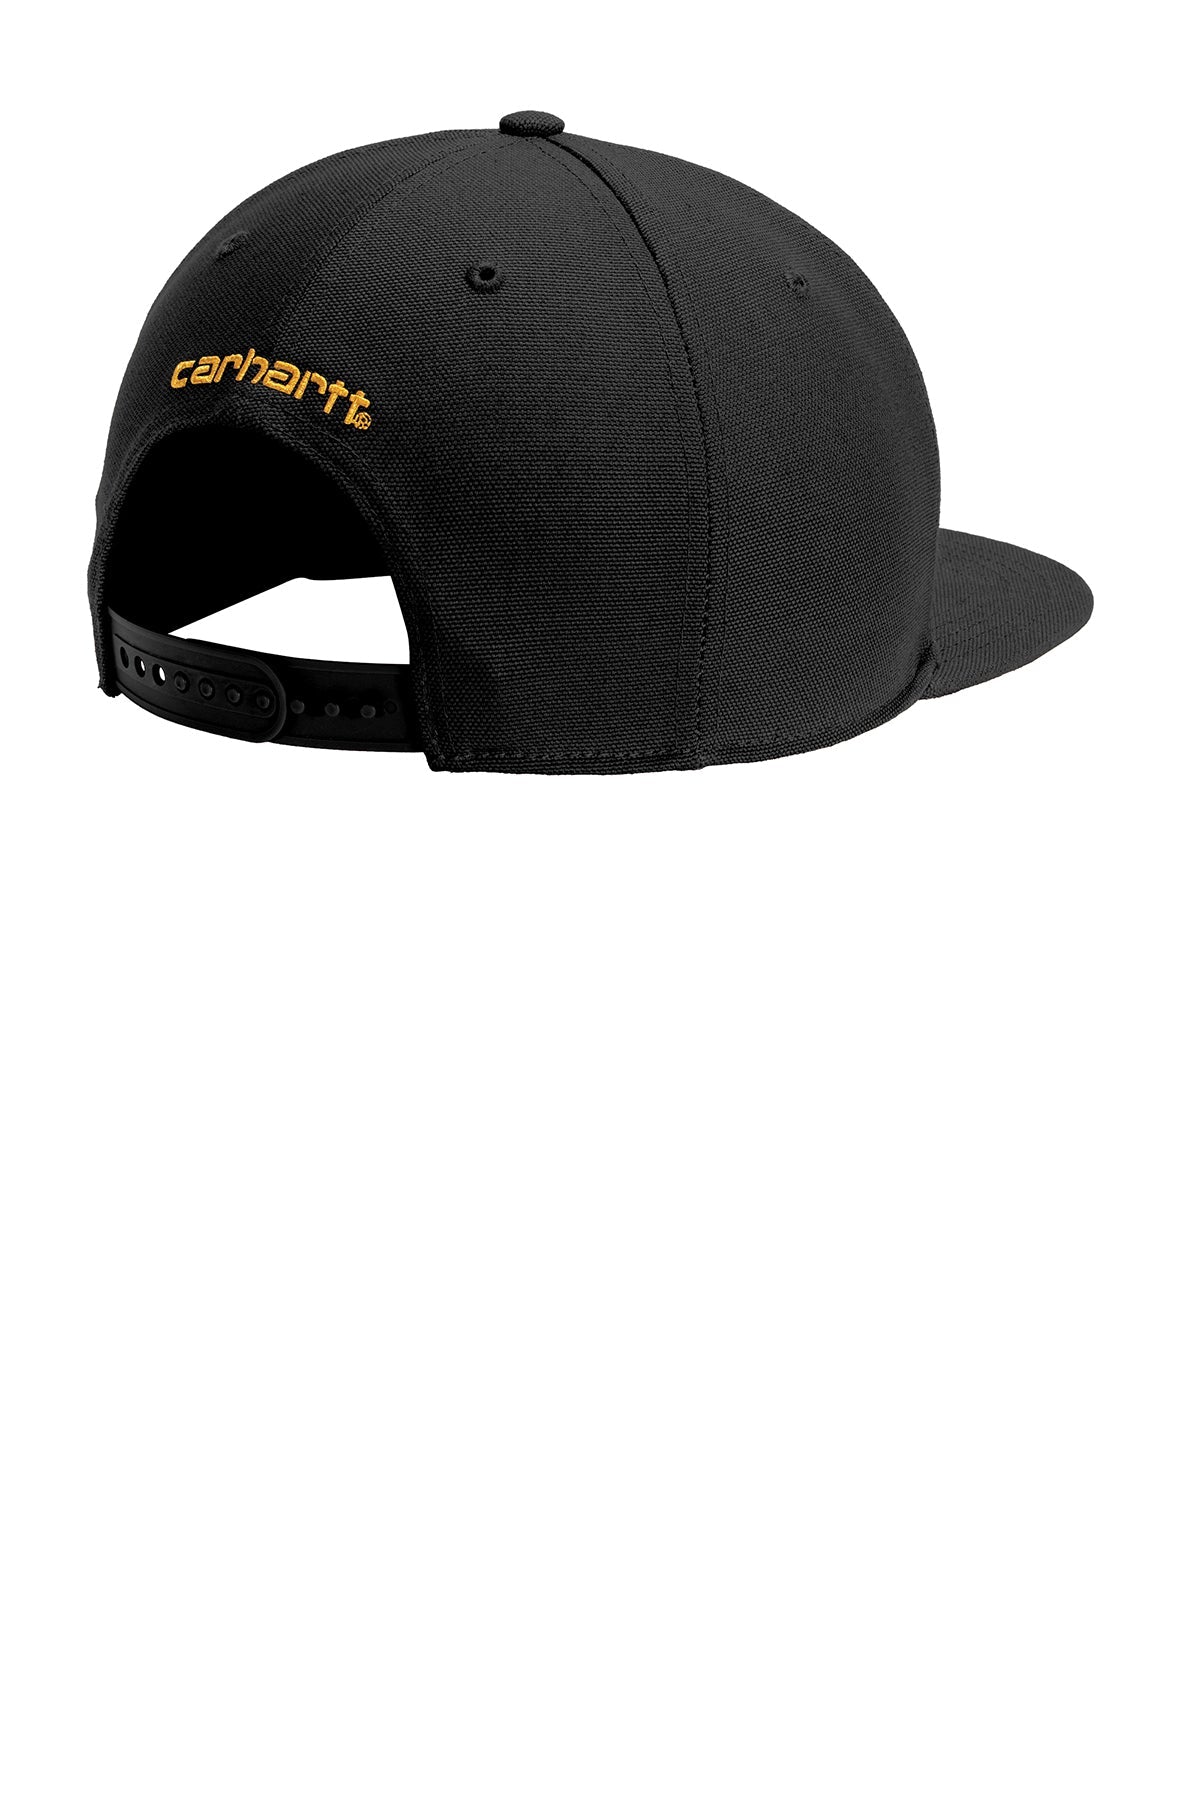 Carhartt Ashland Custom Caps, Black